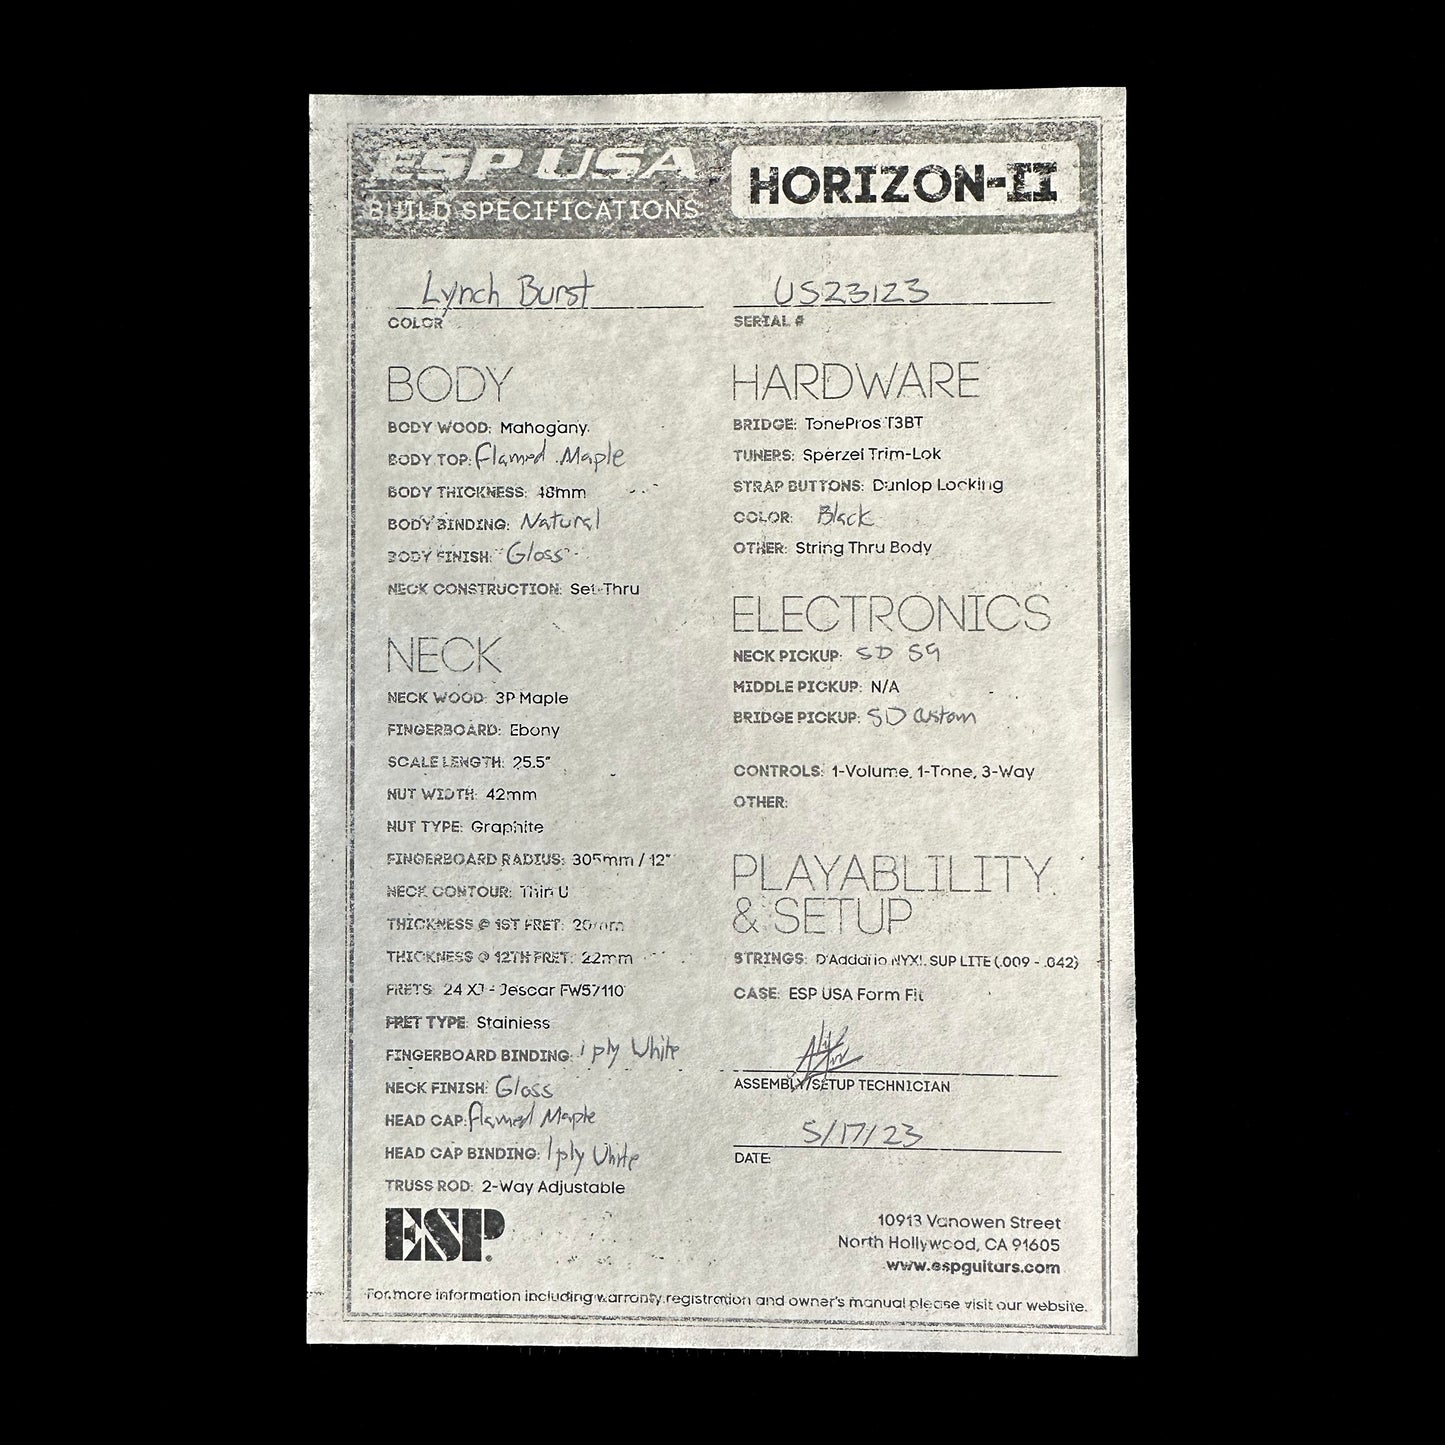 Specs sheet of ESP USA Horizon-II FM Lynch Burst.